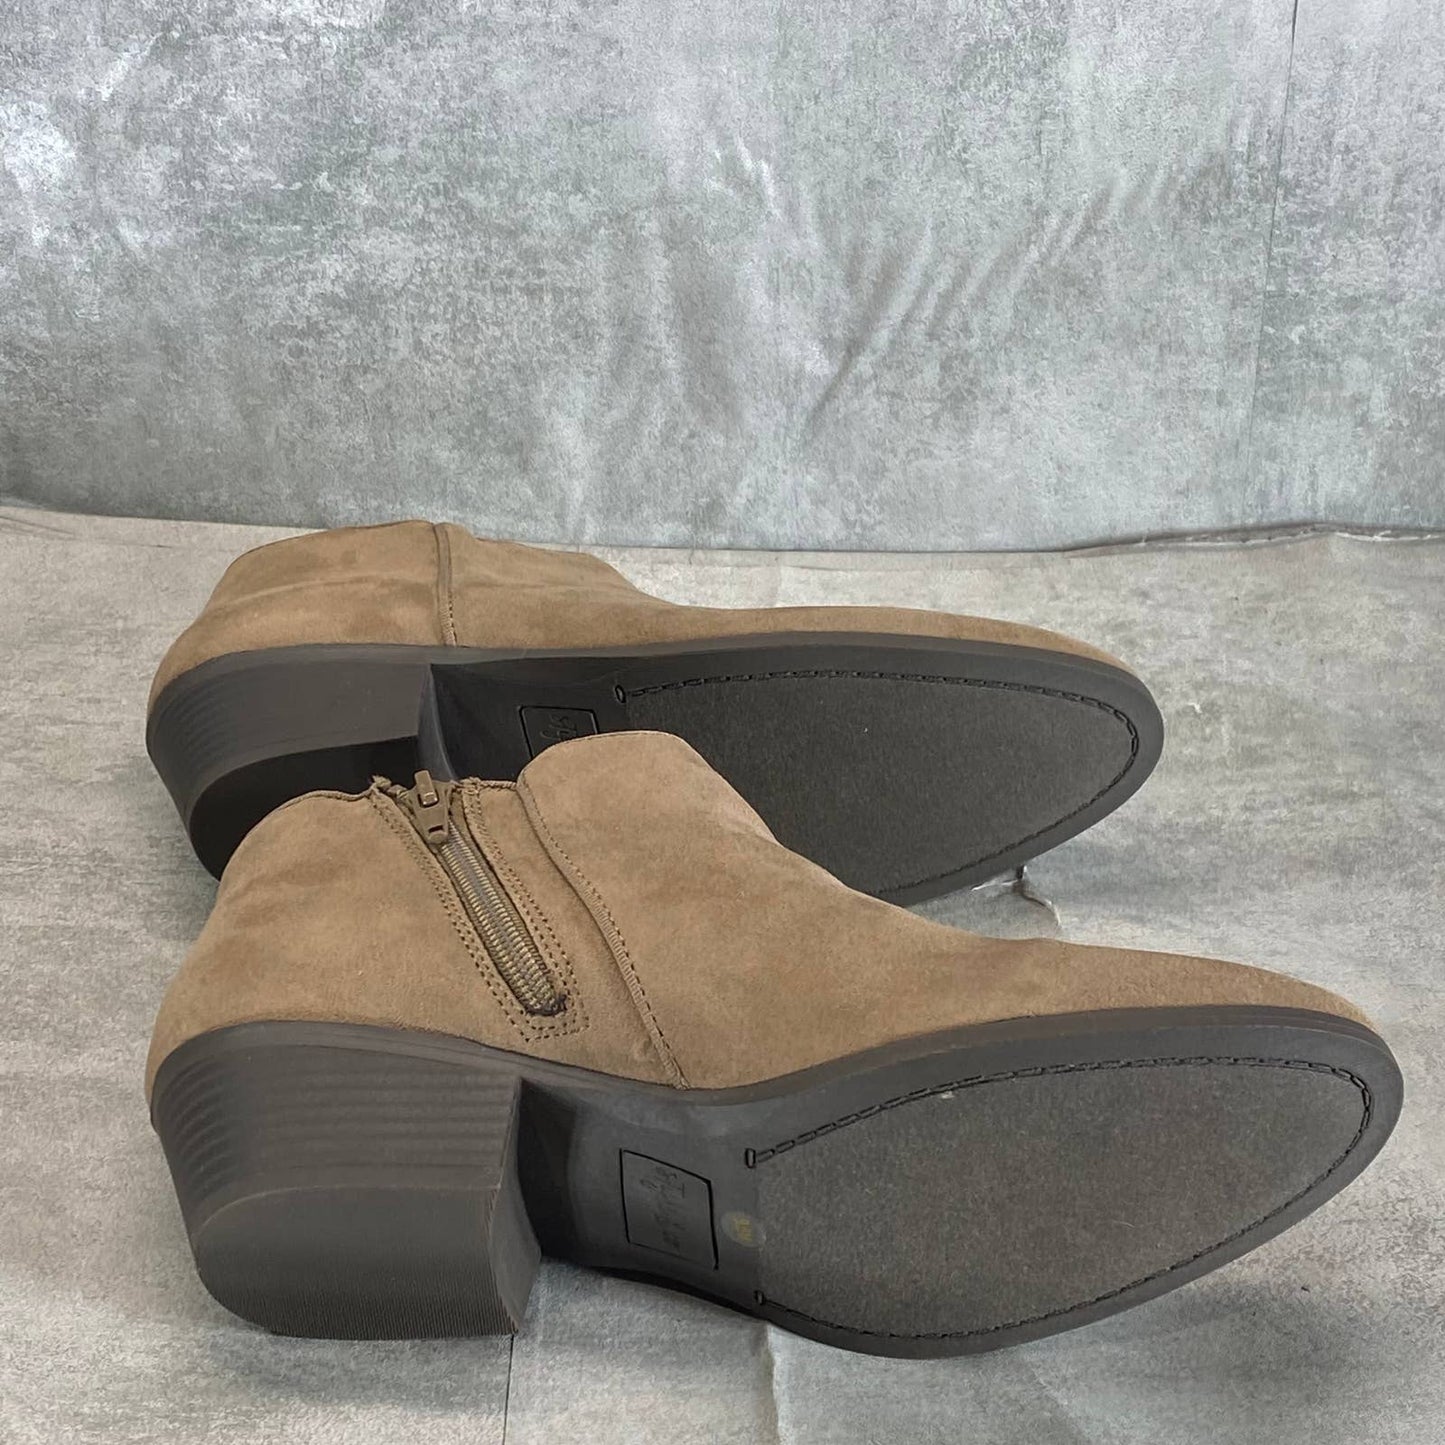 STYLE & CO Women's Taupe Micro Wileyy Almond-Toe Block Heel Ankle Booties SZ 9.5